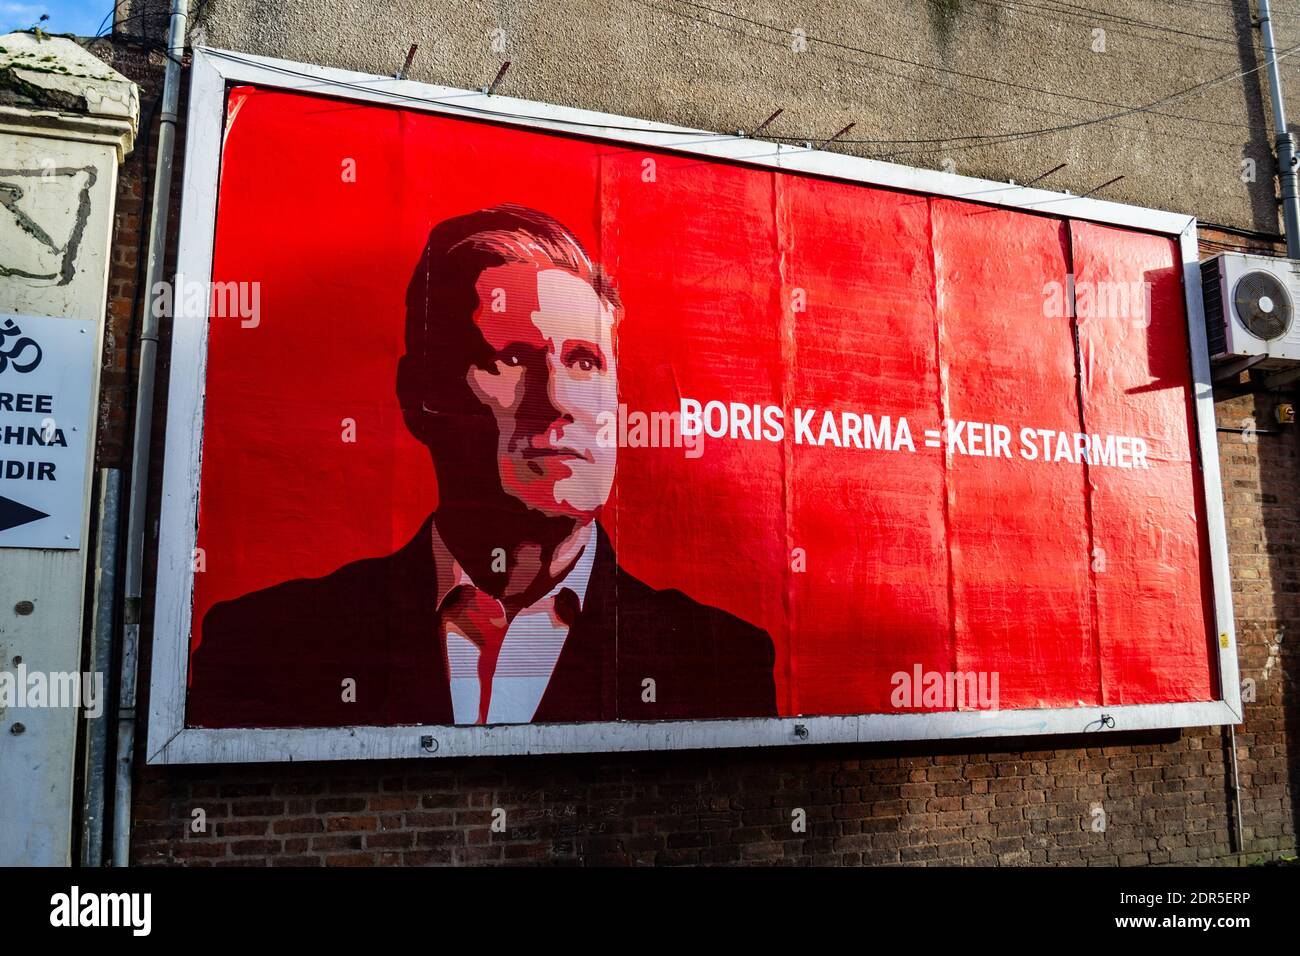 Boris Karma = Keir Starmer - Political billboard with Keir Starmer vs Boris Johnson Stock Photo